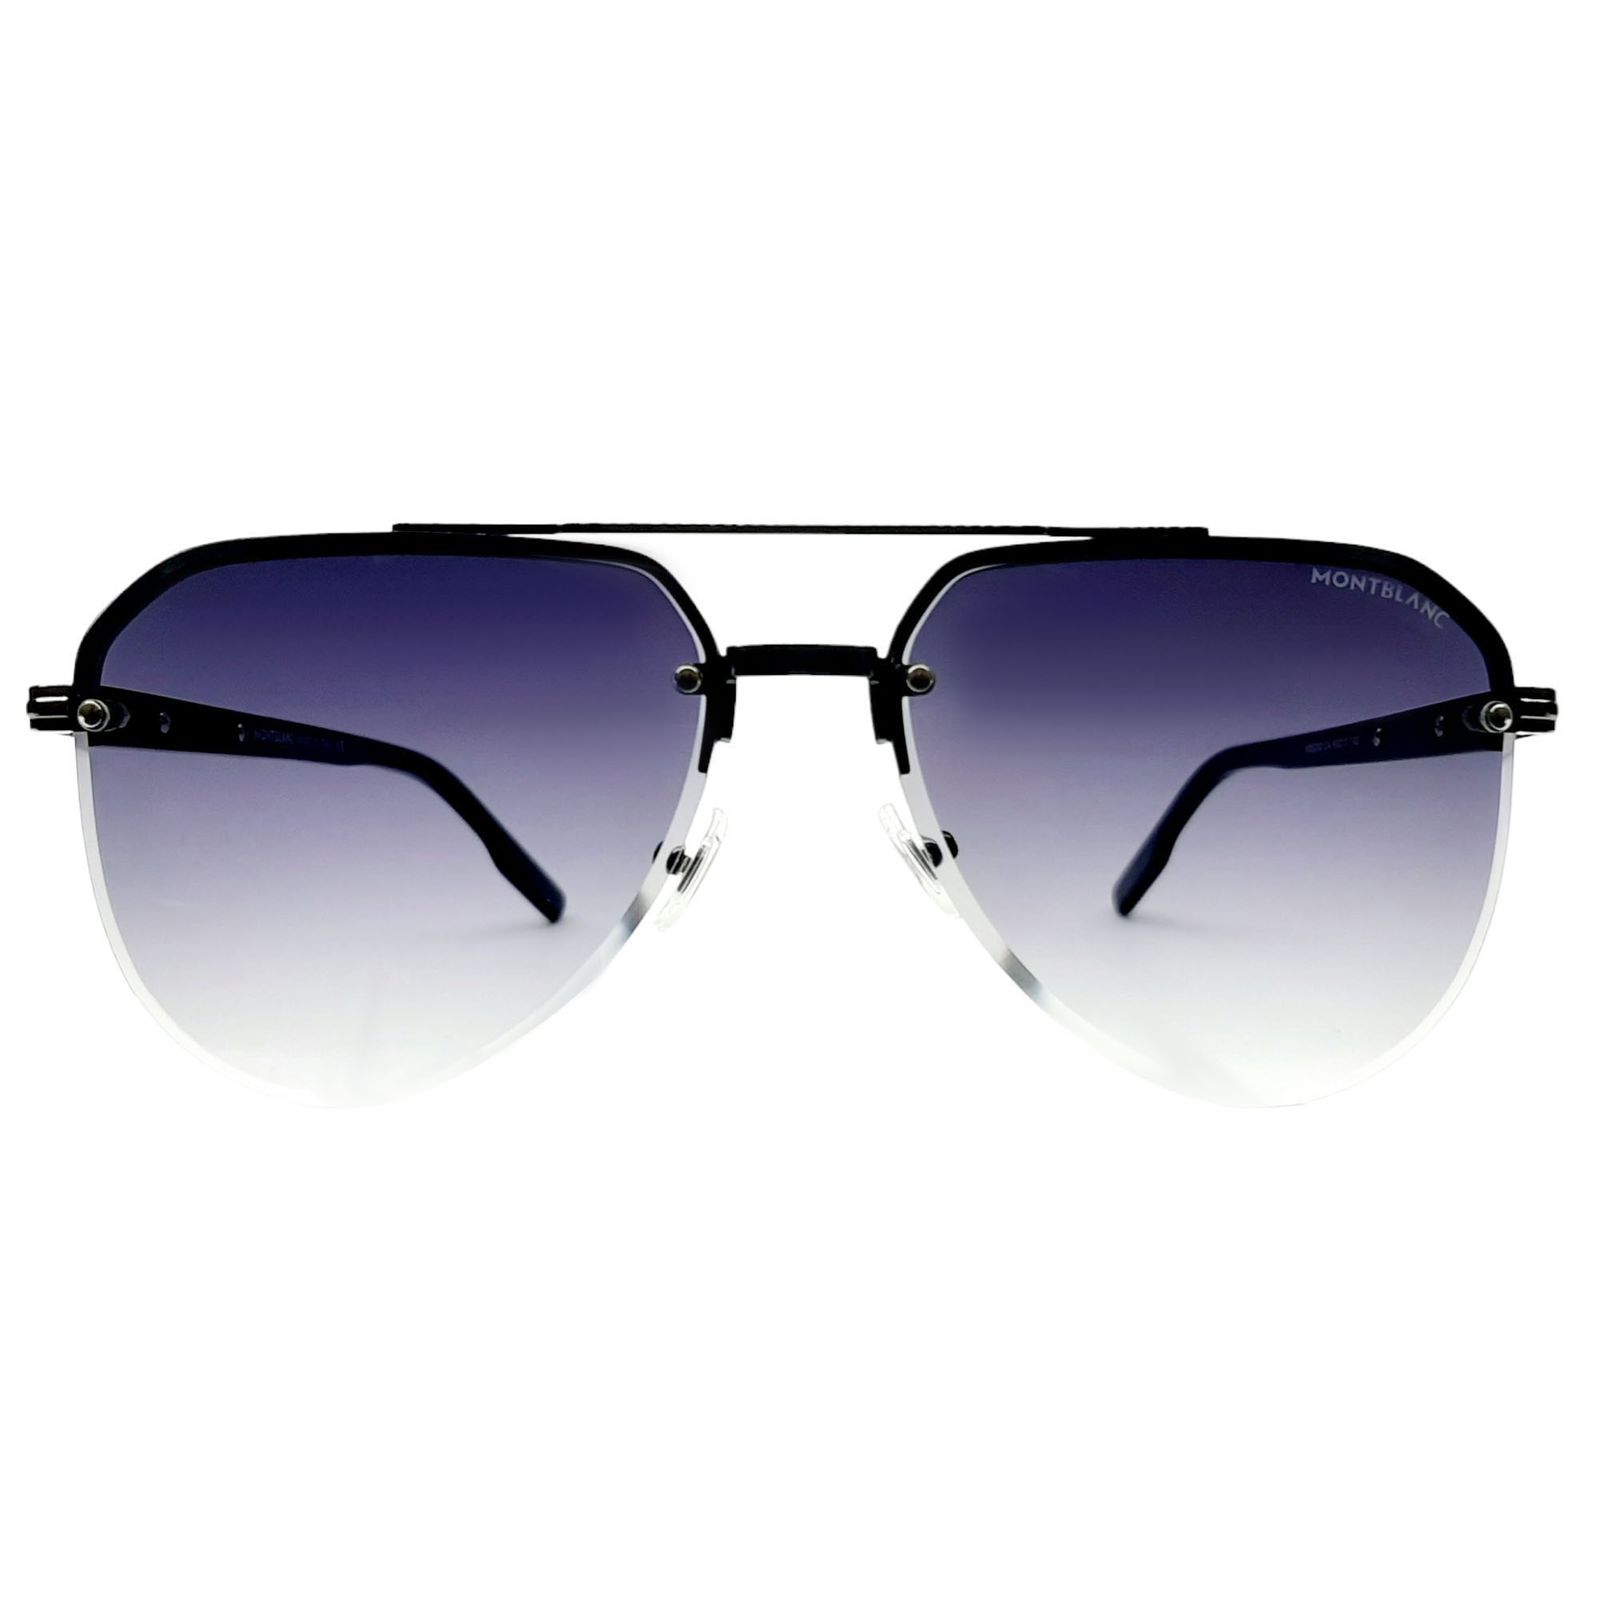 عینک آفتابی مون بلان مدل MB0240c4